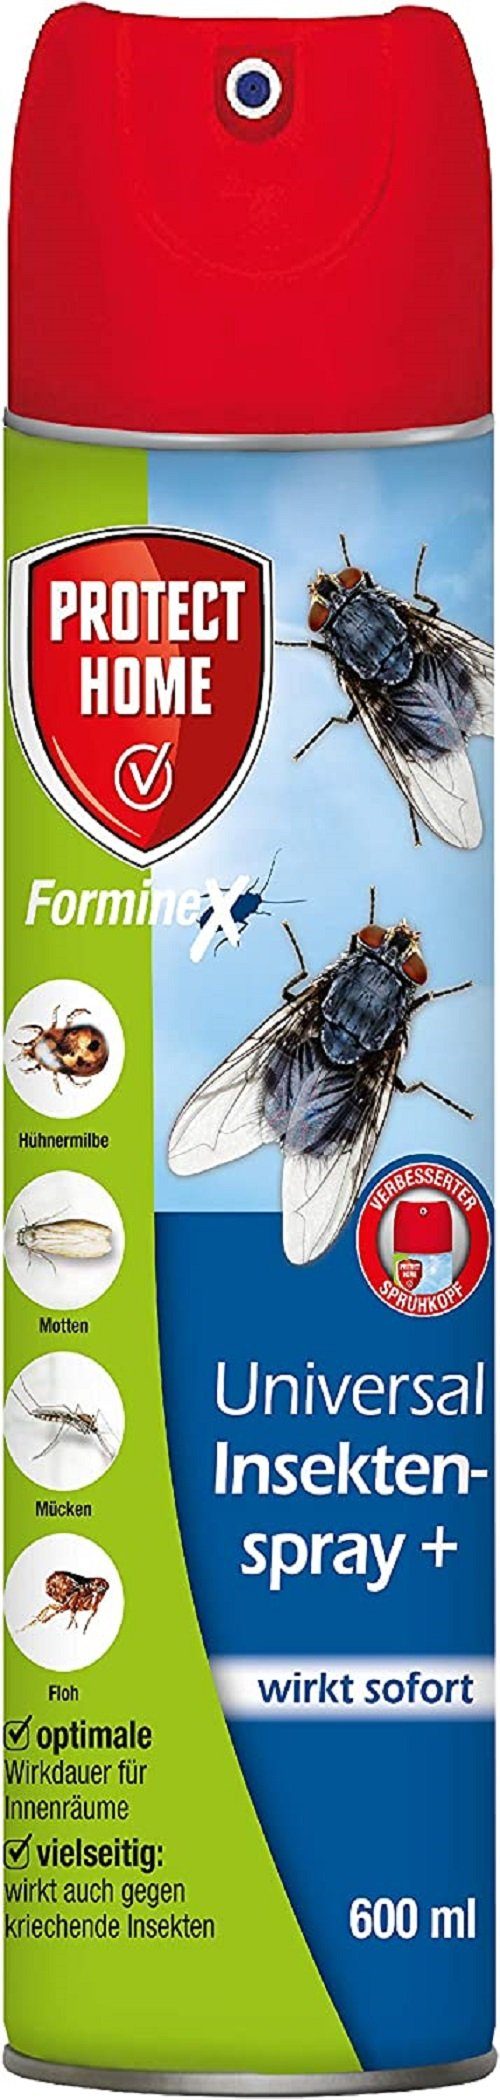 Protect Home Insektenspray Protect Home FormineX Universal Insektenspray+ 600 ml